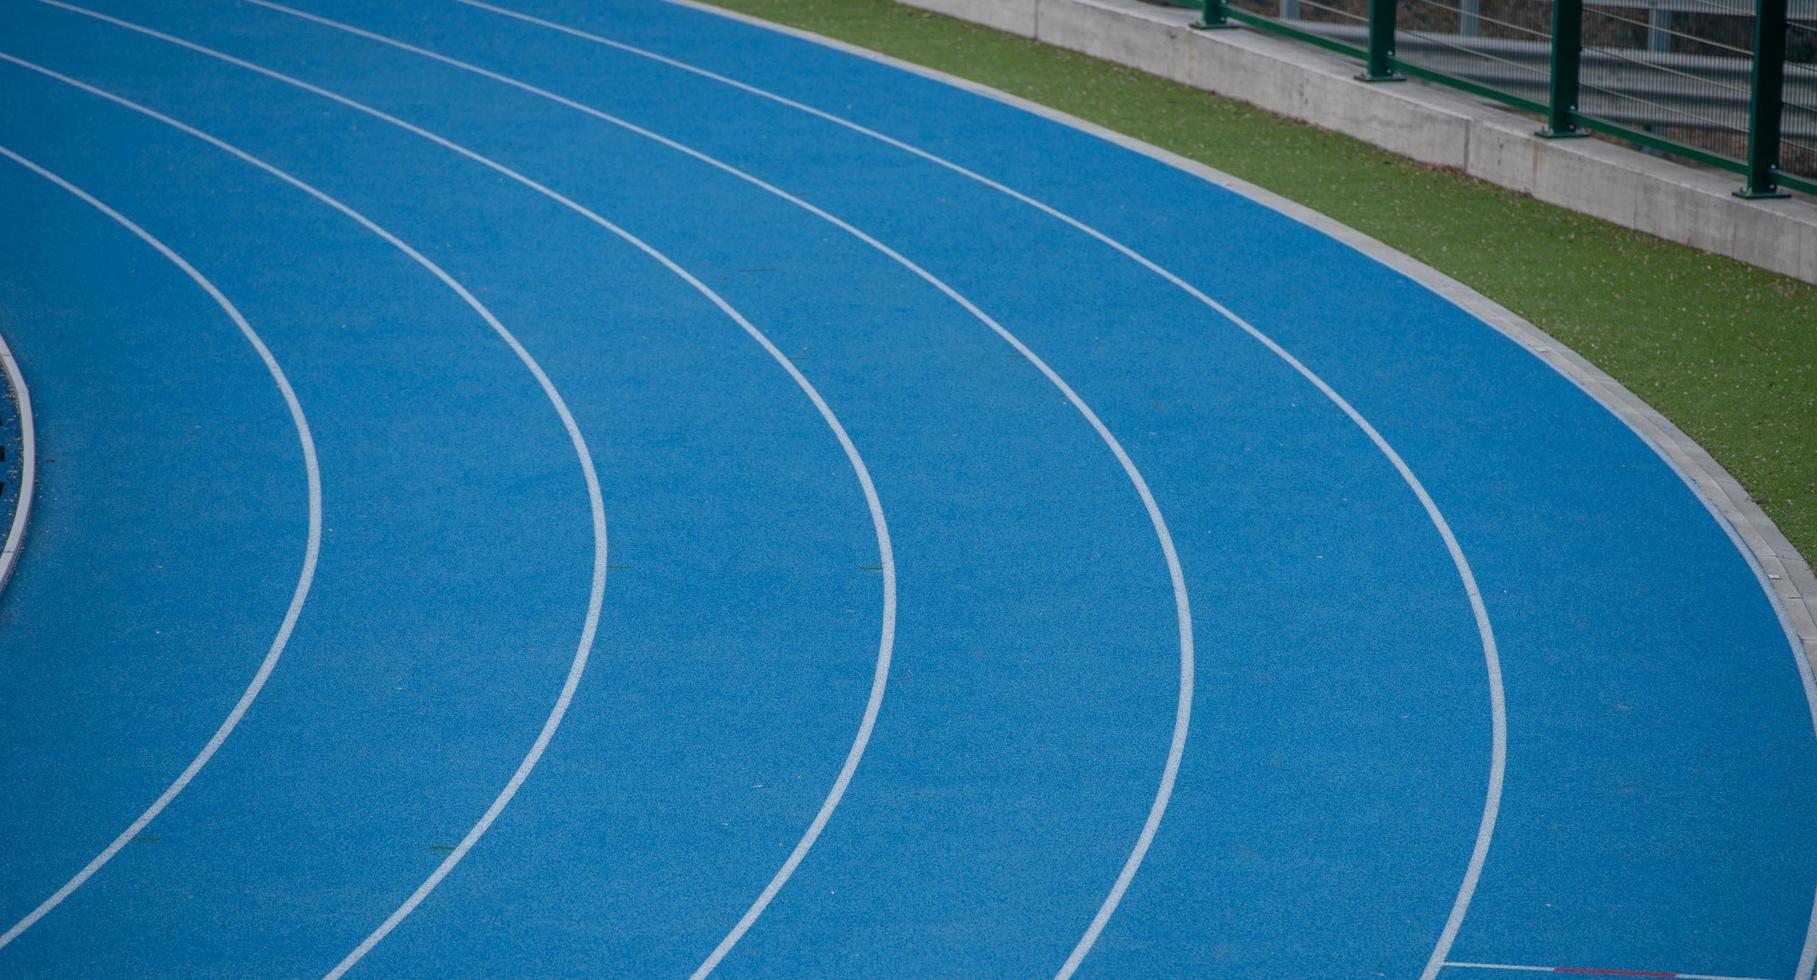 Lanes on the track of athletics photo